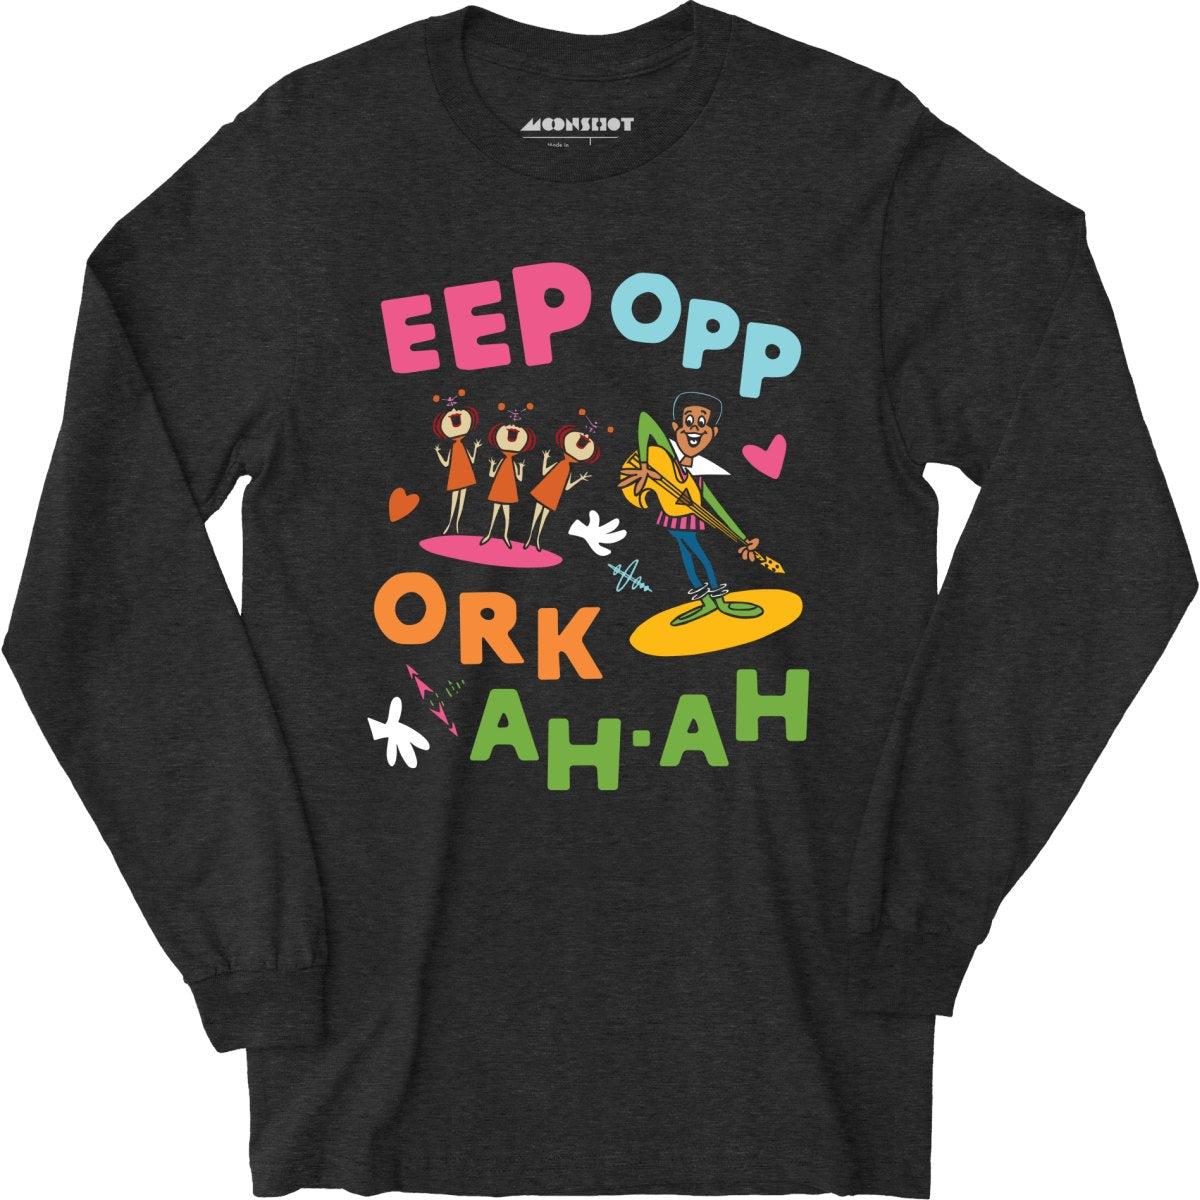 Eep Opp Ork Ah Ah - Long Sleeve T-Shirt